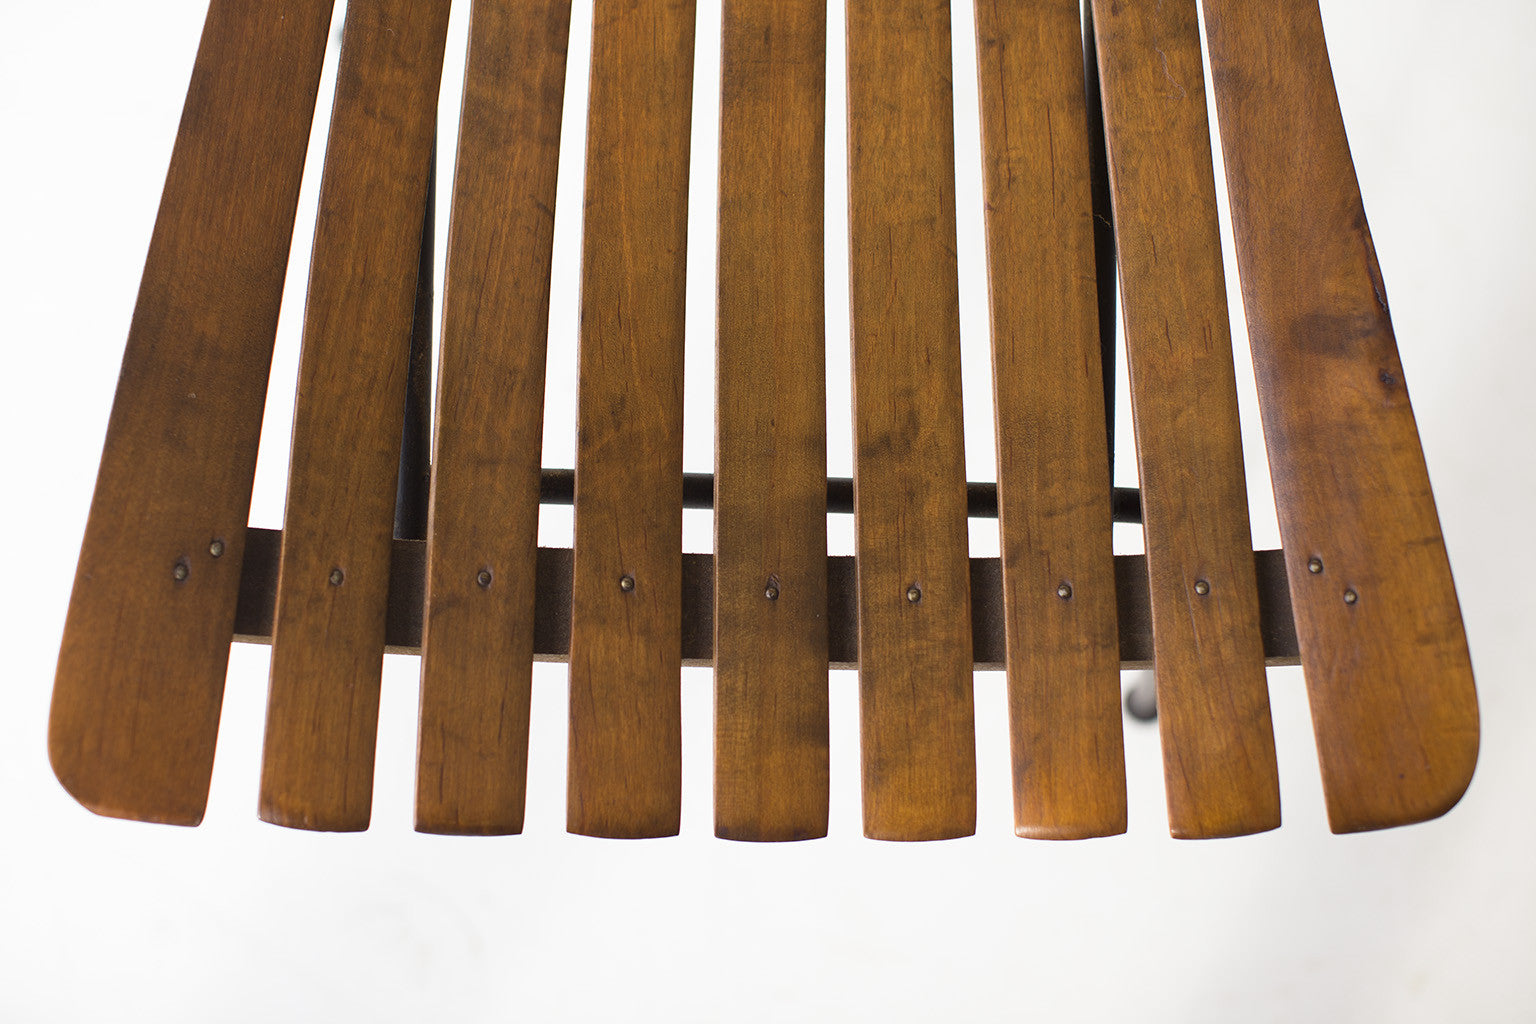 Arthur Umanoff Dining Side Chairs for Raymor - 01181610